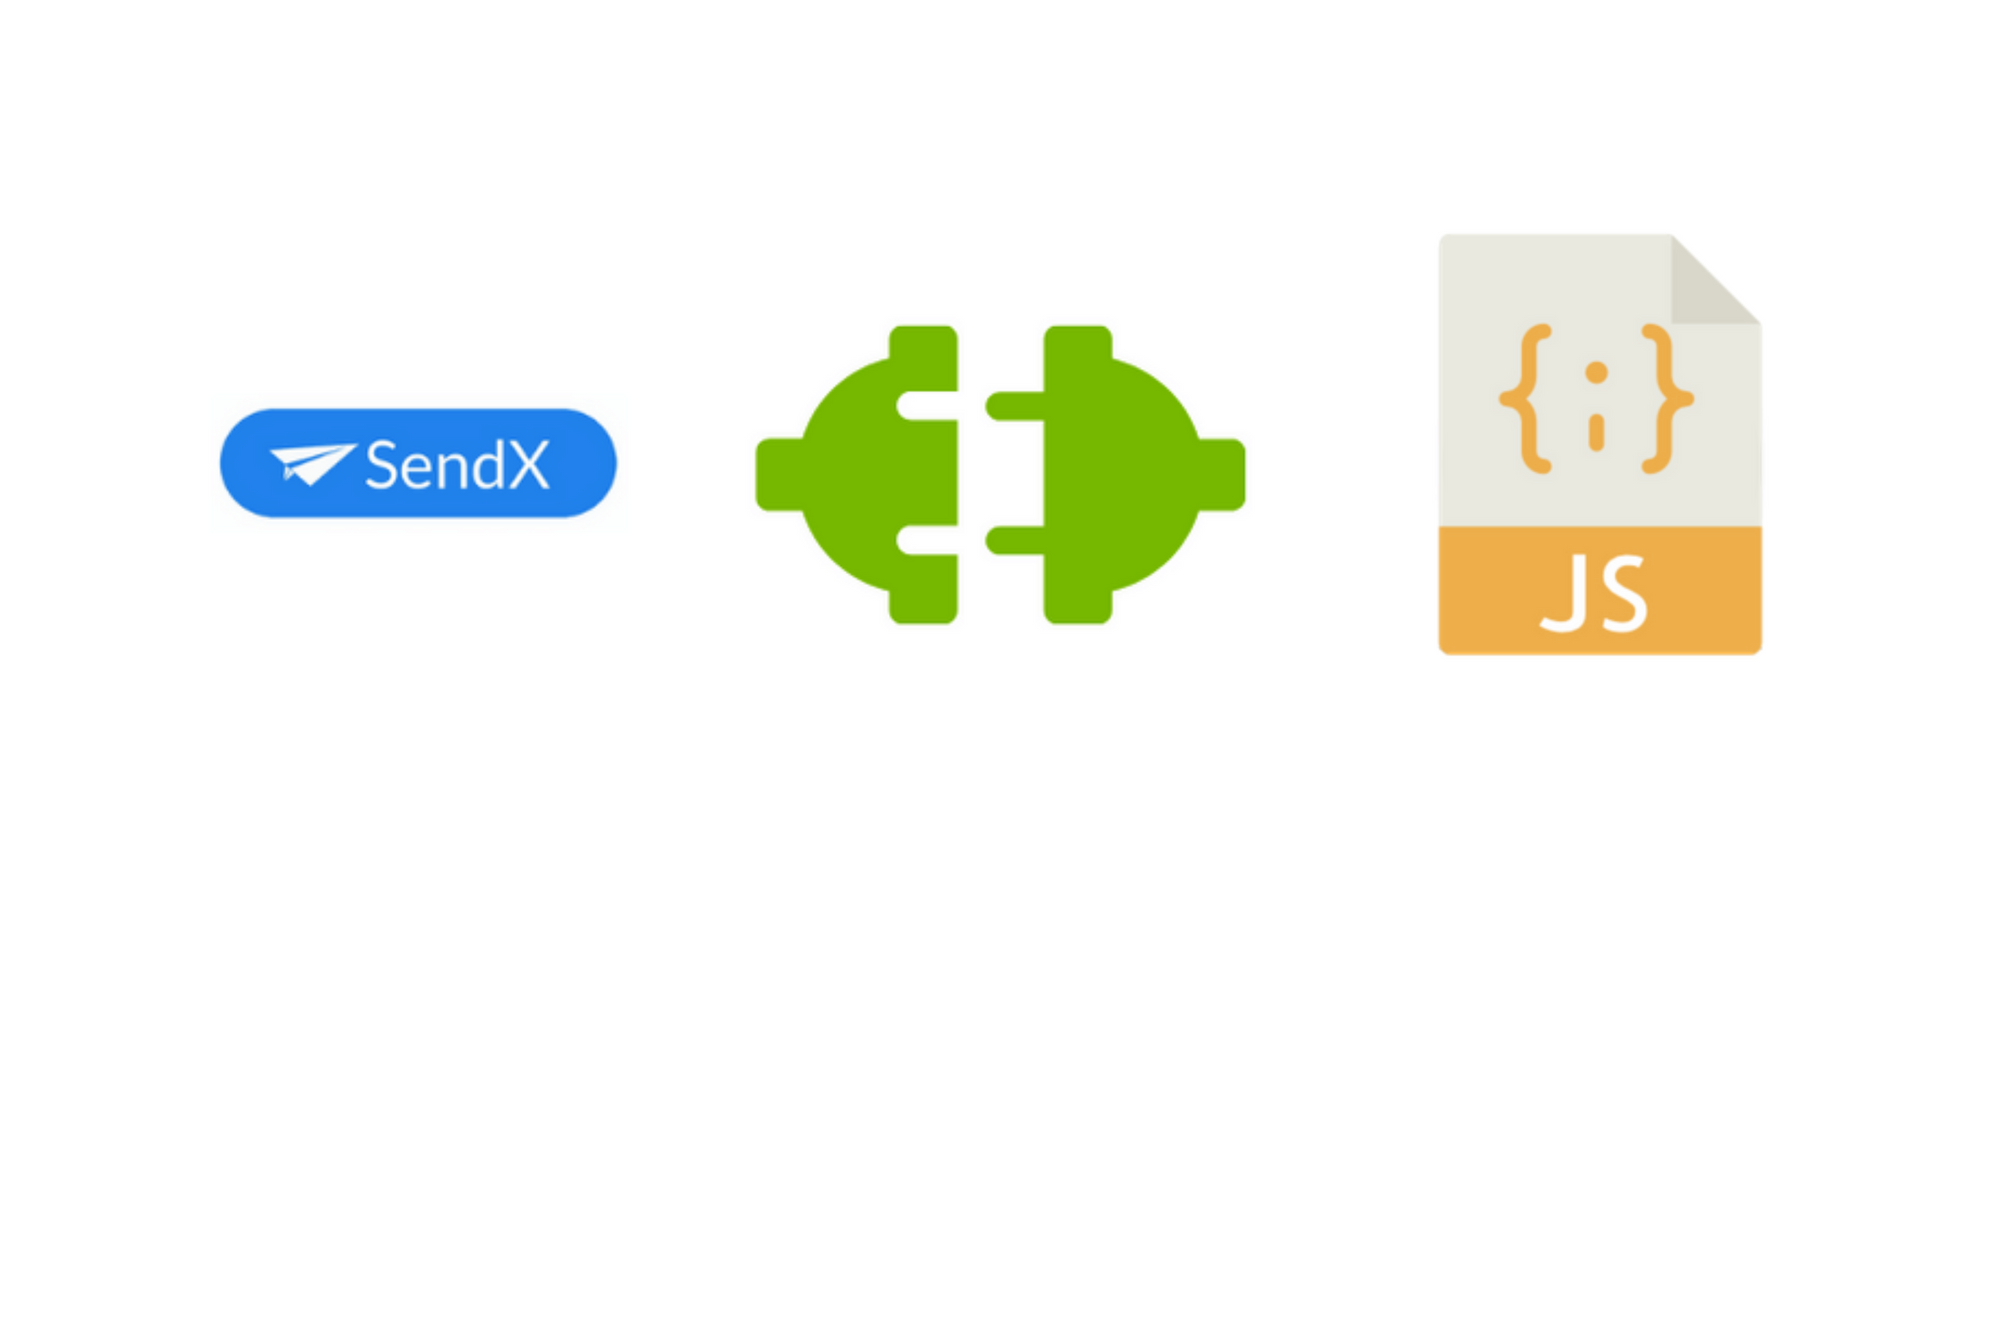 SendX---JS